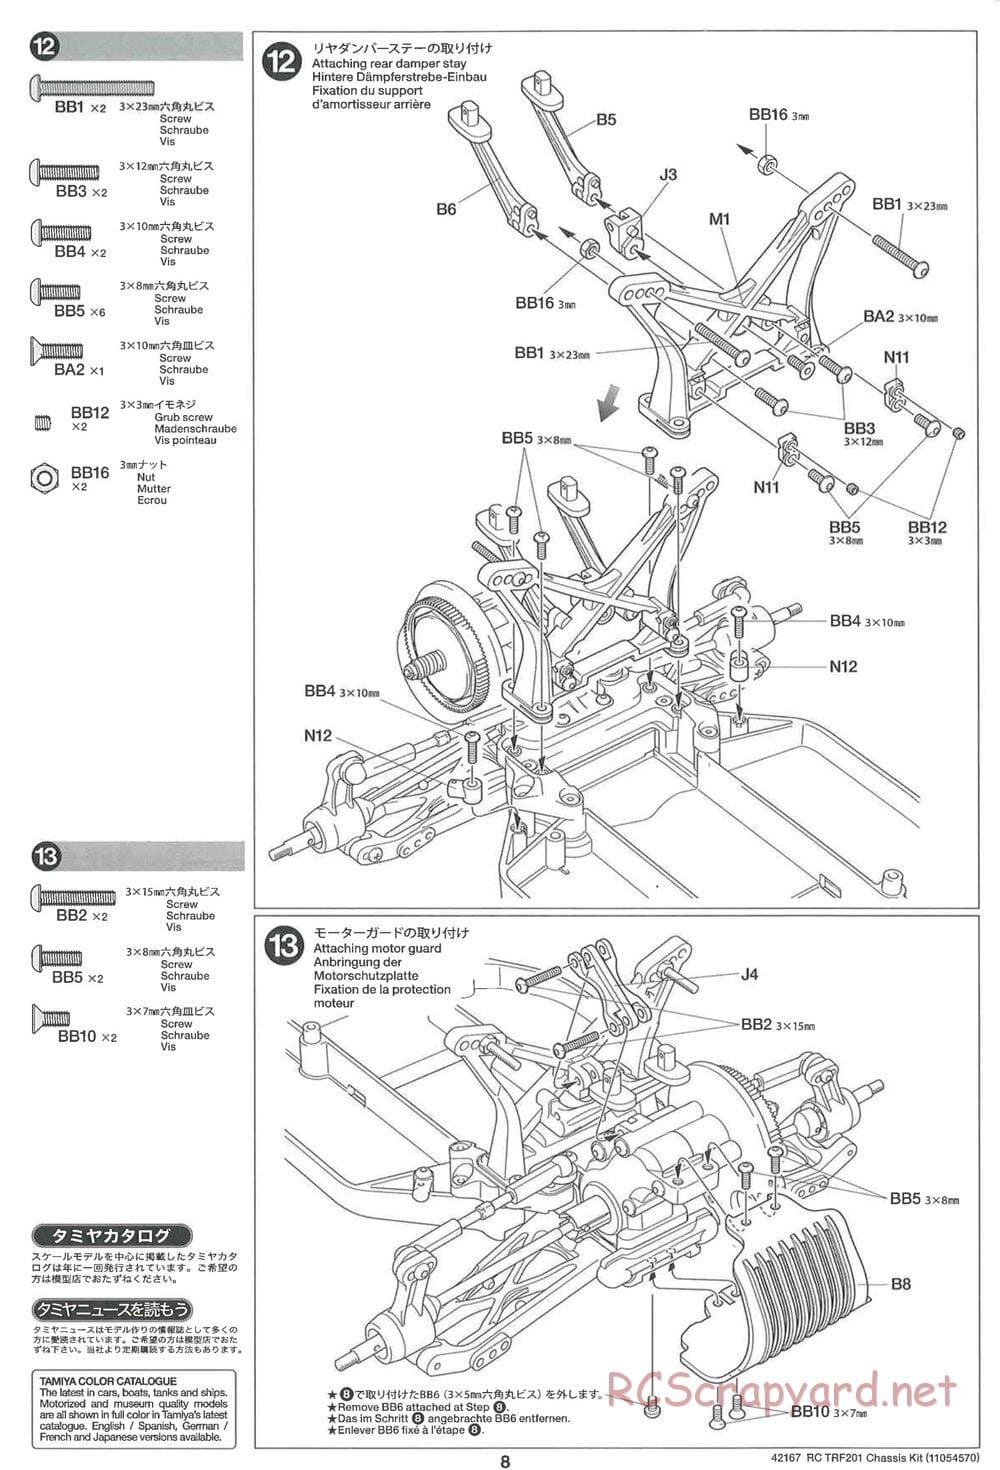 Tamiya - TRF201 Chassis - Manual - Page 8